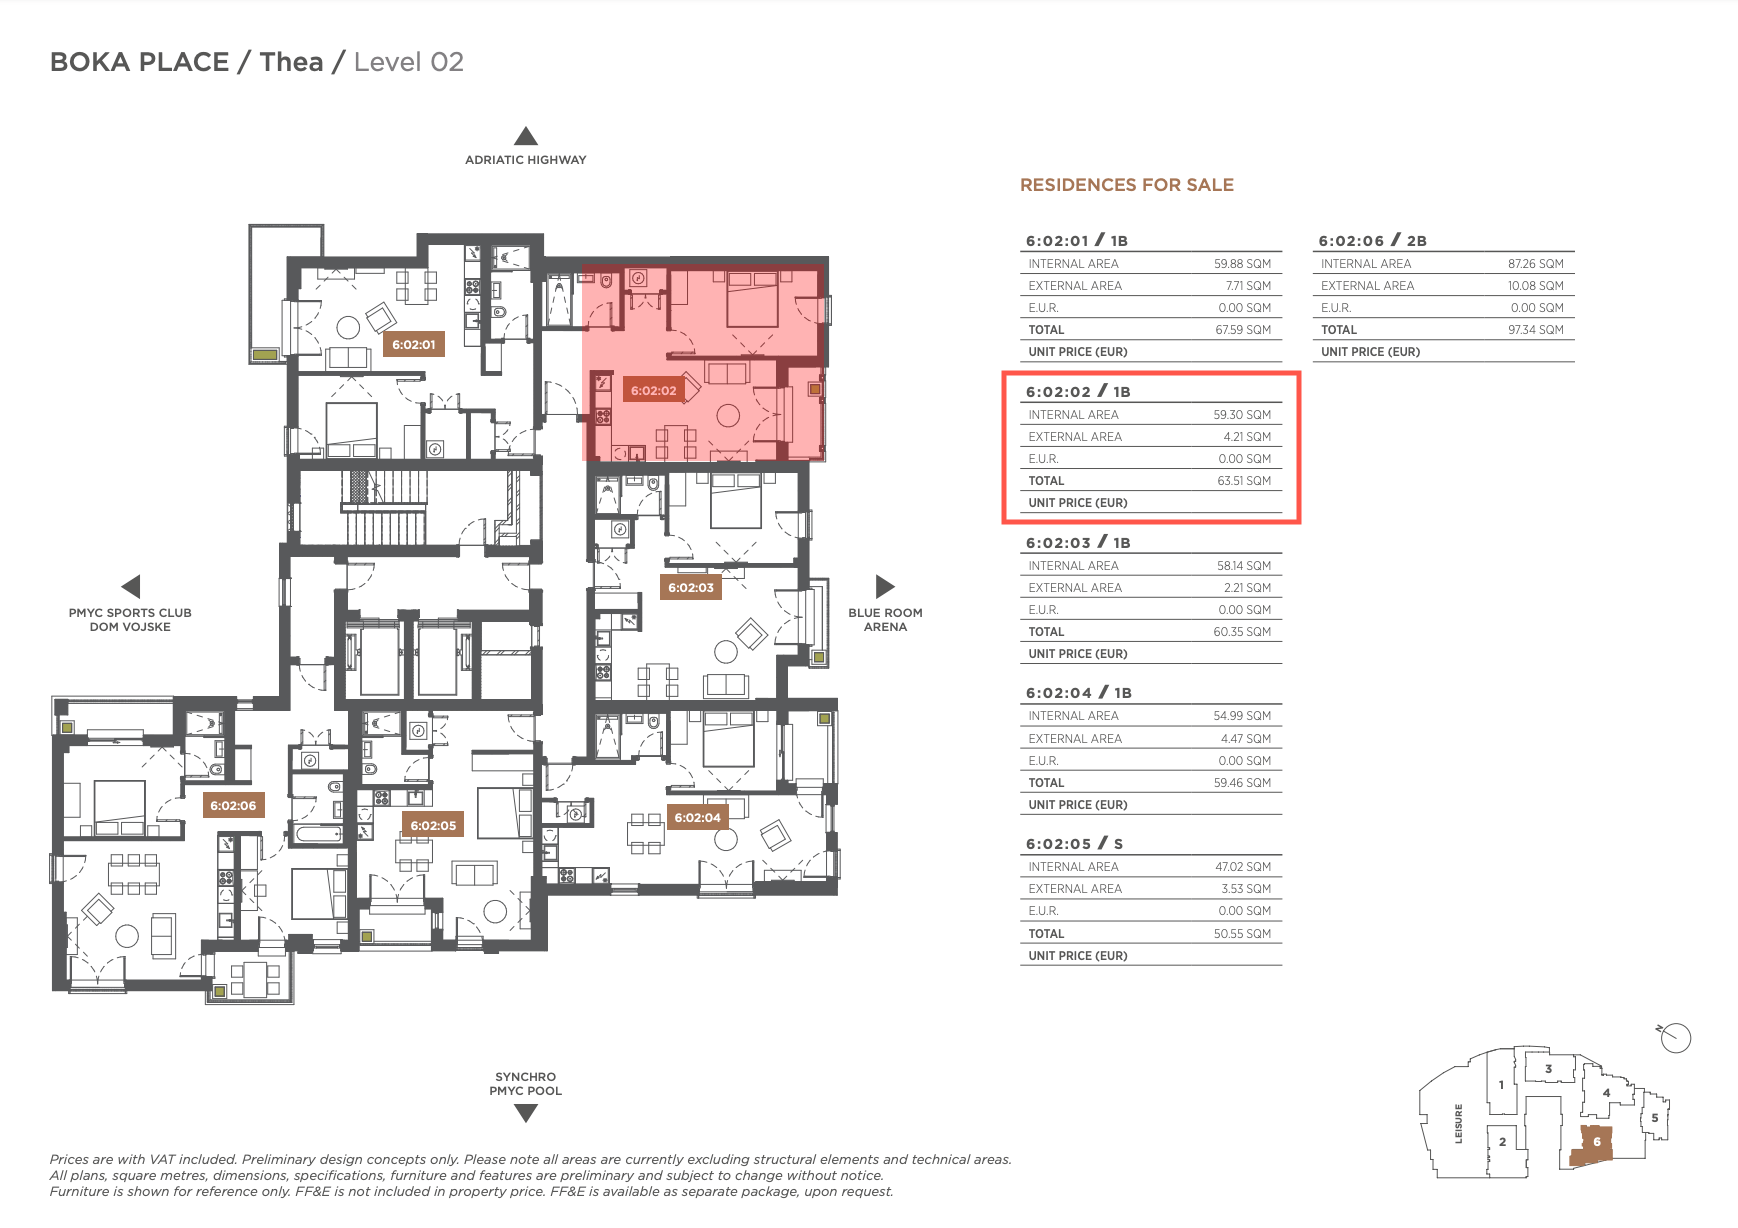 Apartment plan